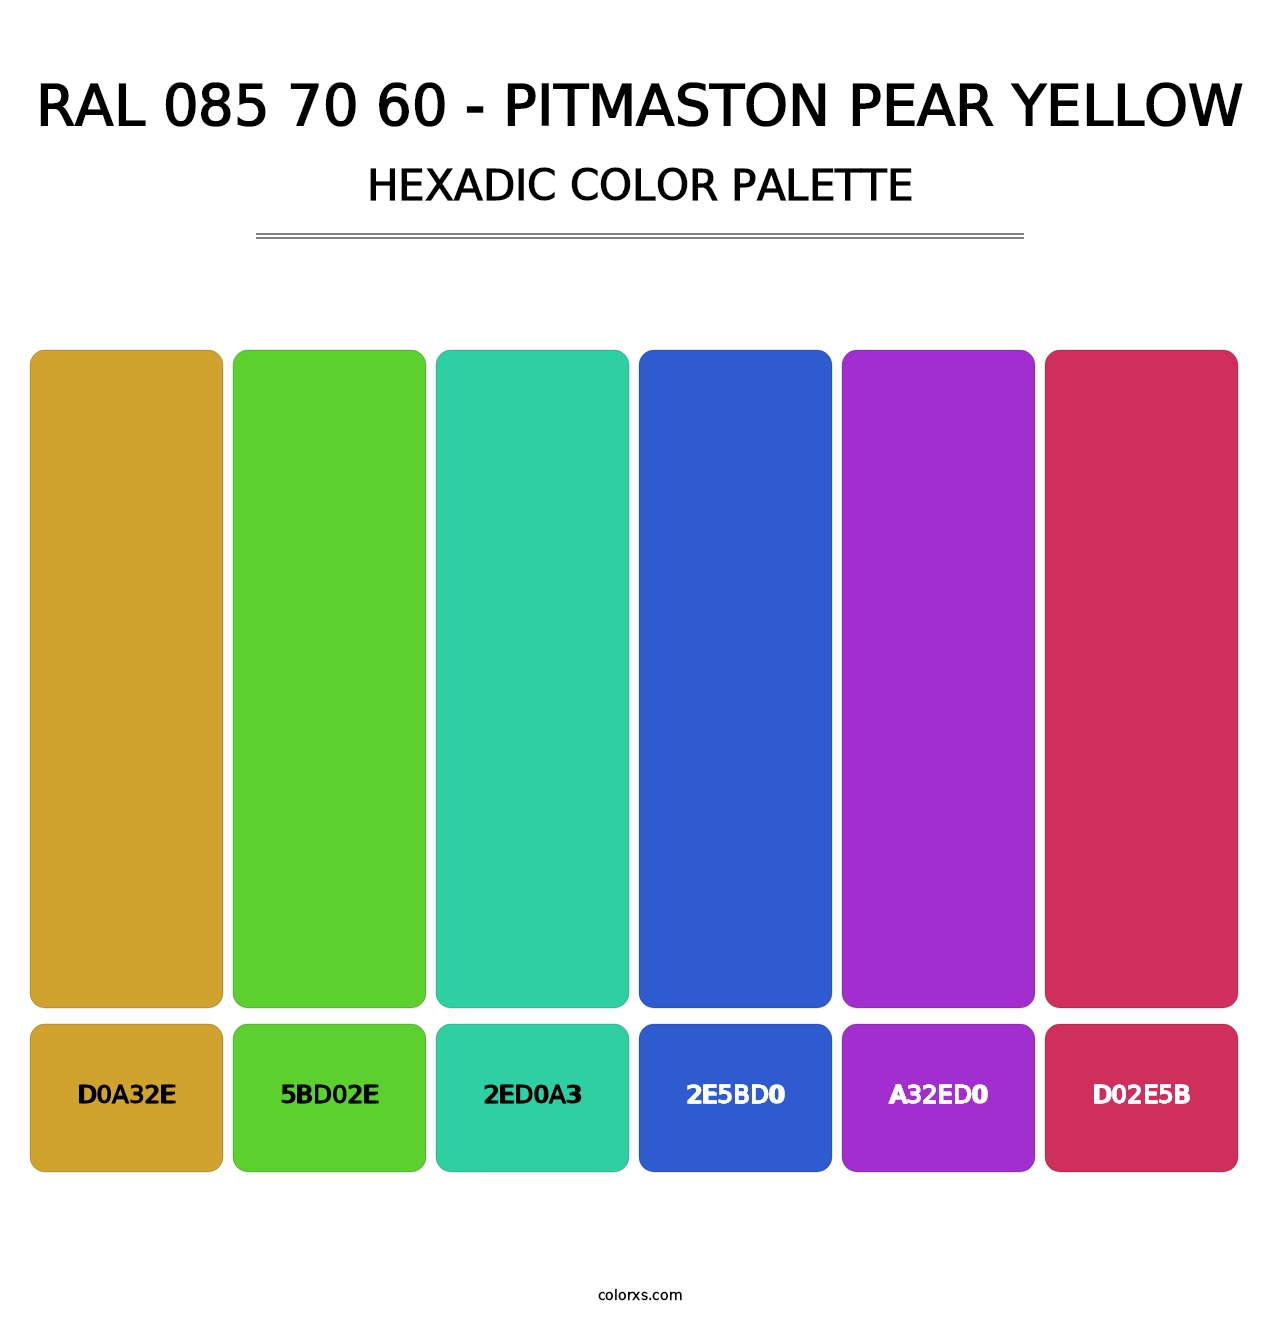 RAL 085 70 60 - Pitmaston Pear Yellow - Hexadic Color Palette